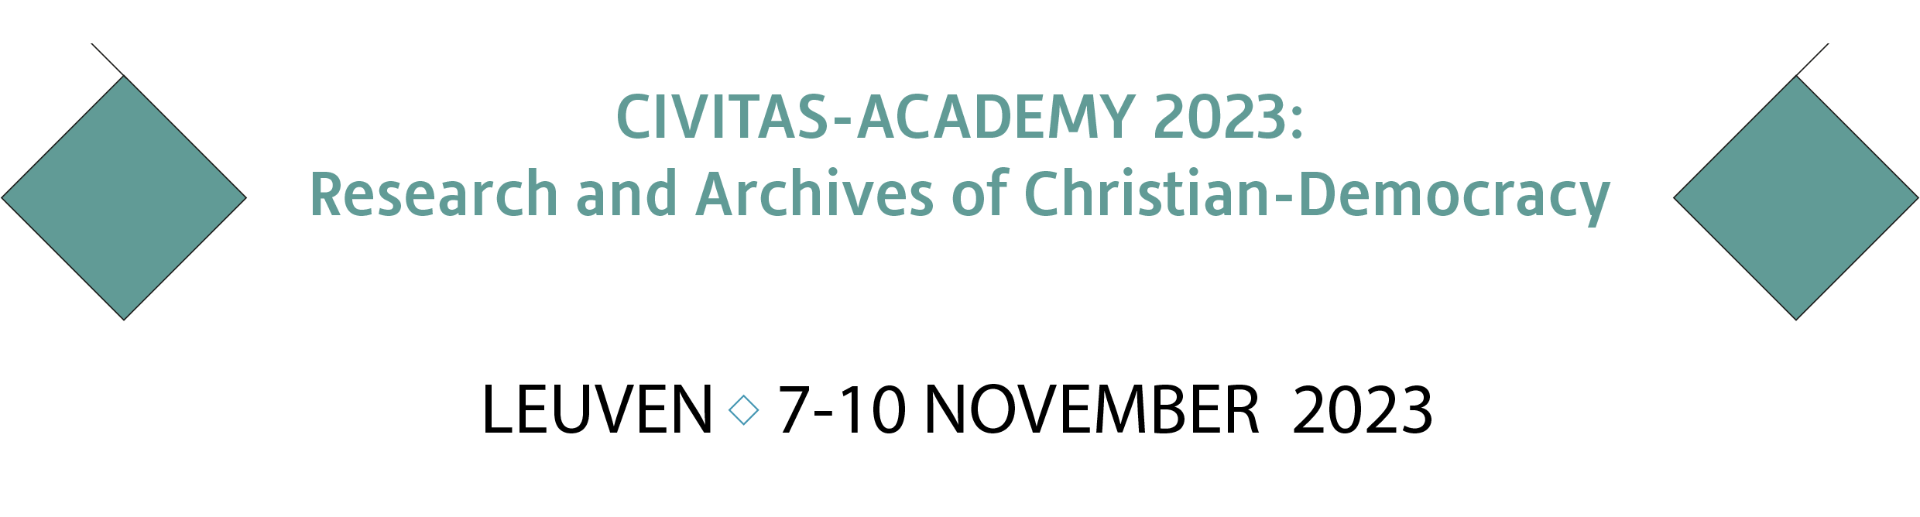 CIVITAS Academy 2023